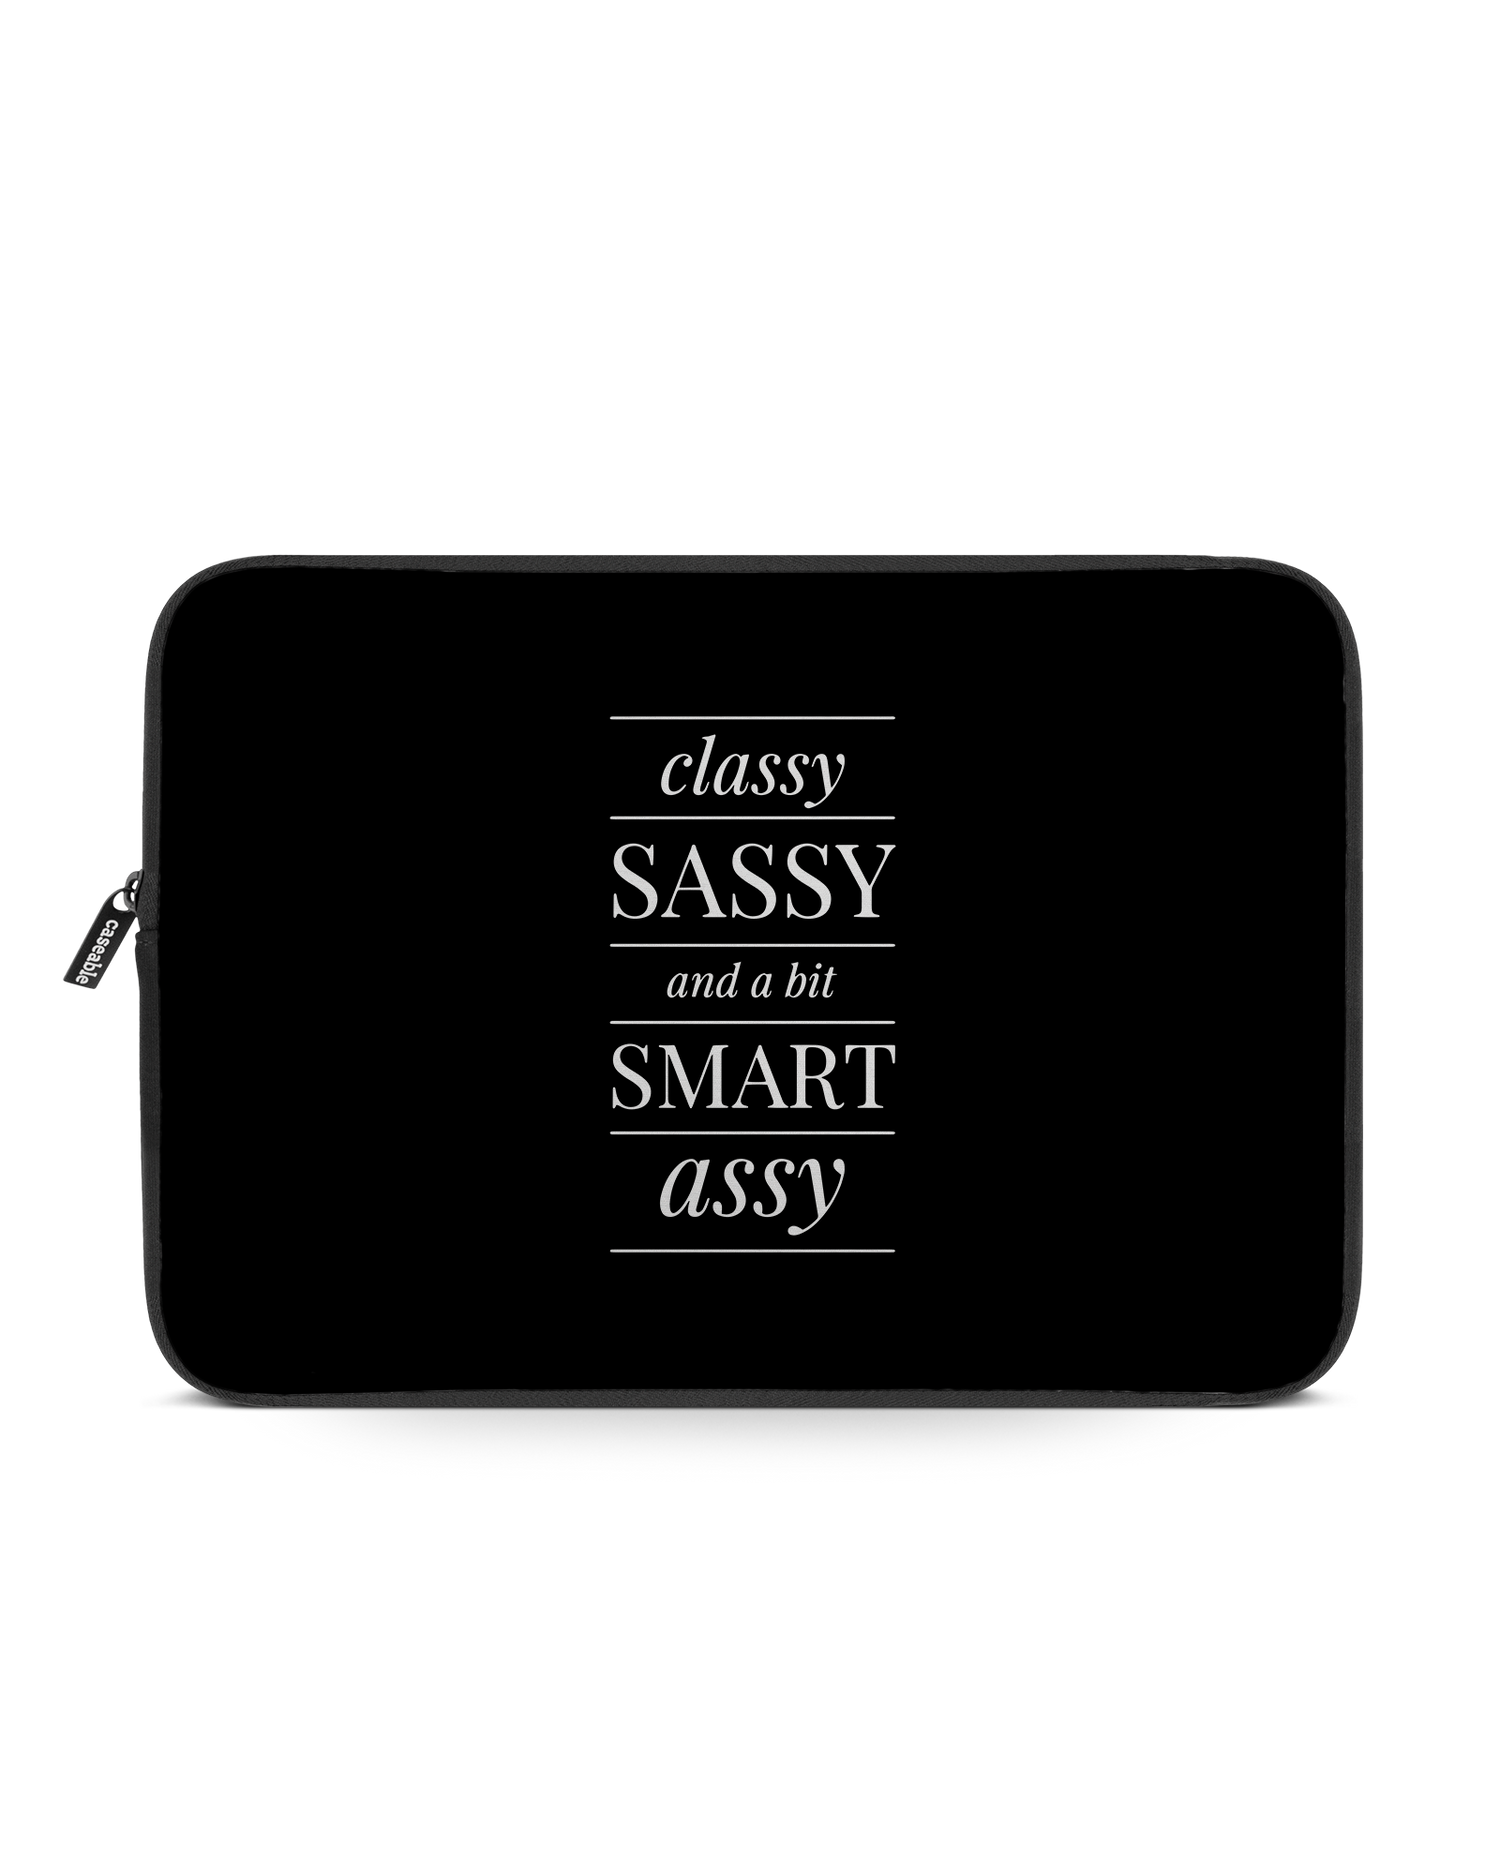 Classy Sassy Laptophülle 14 Zoll: Vorderansicht